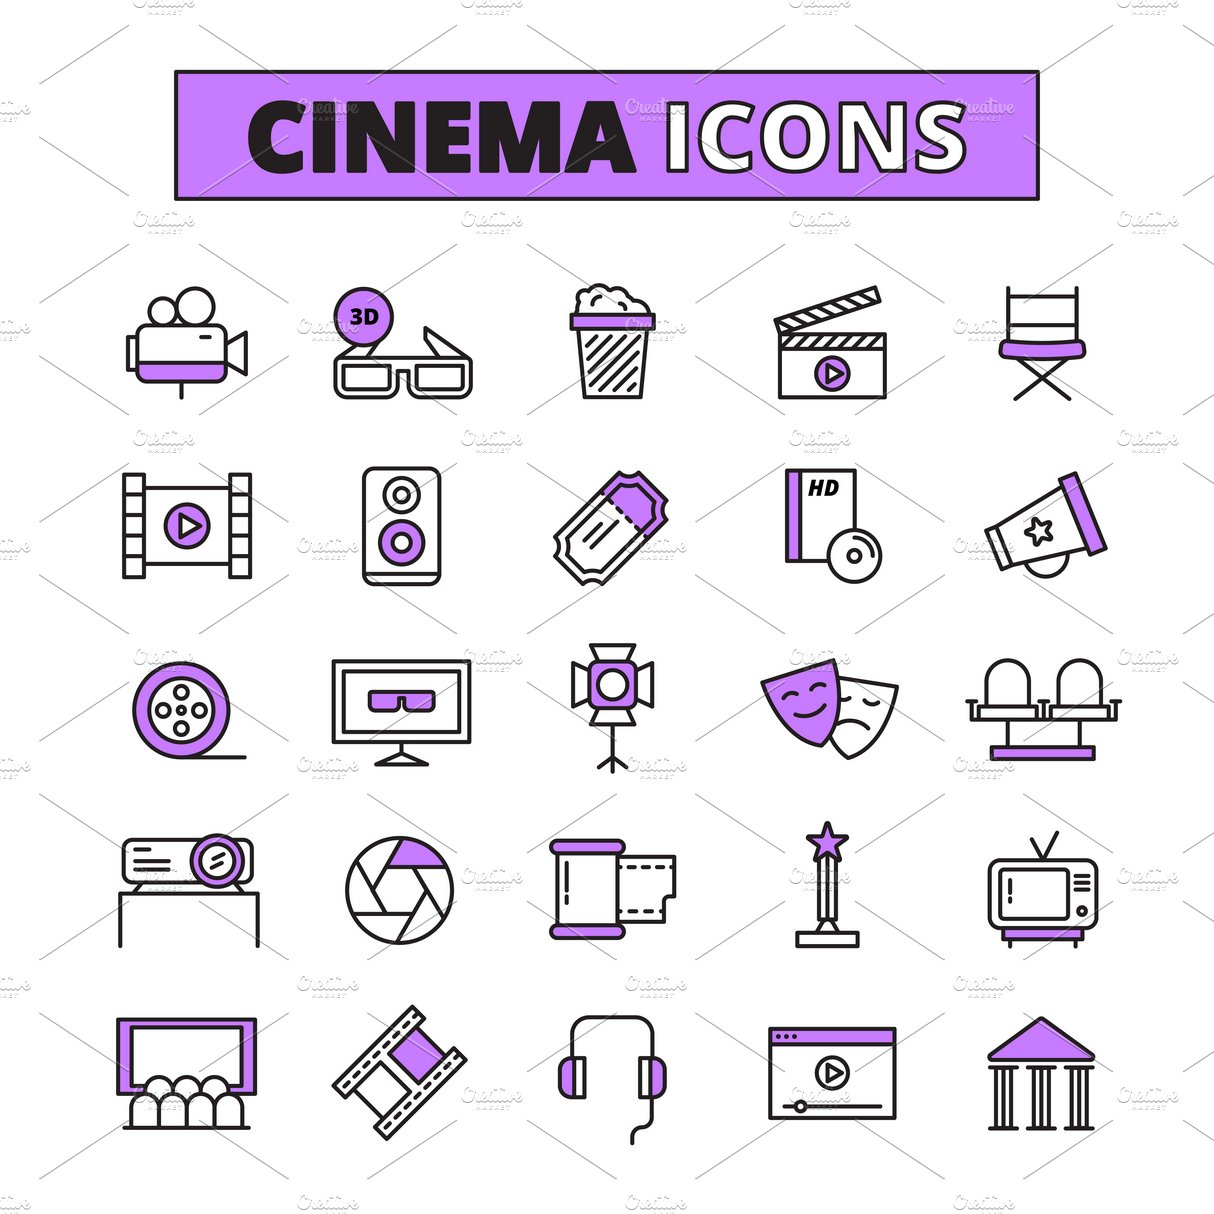 Movie theater cinema icons set cover image.